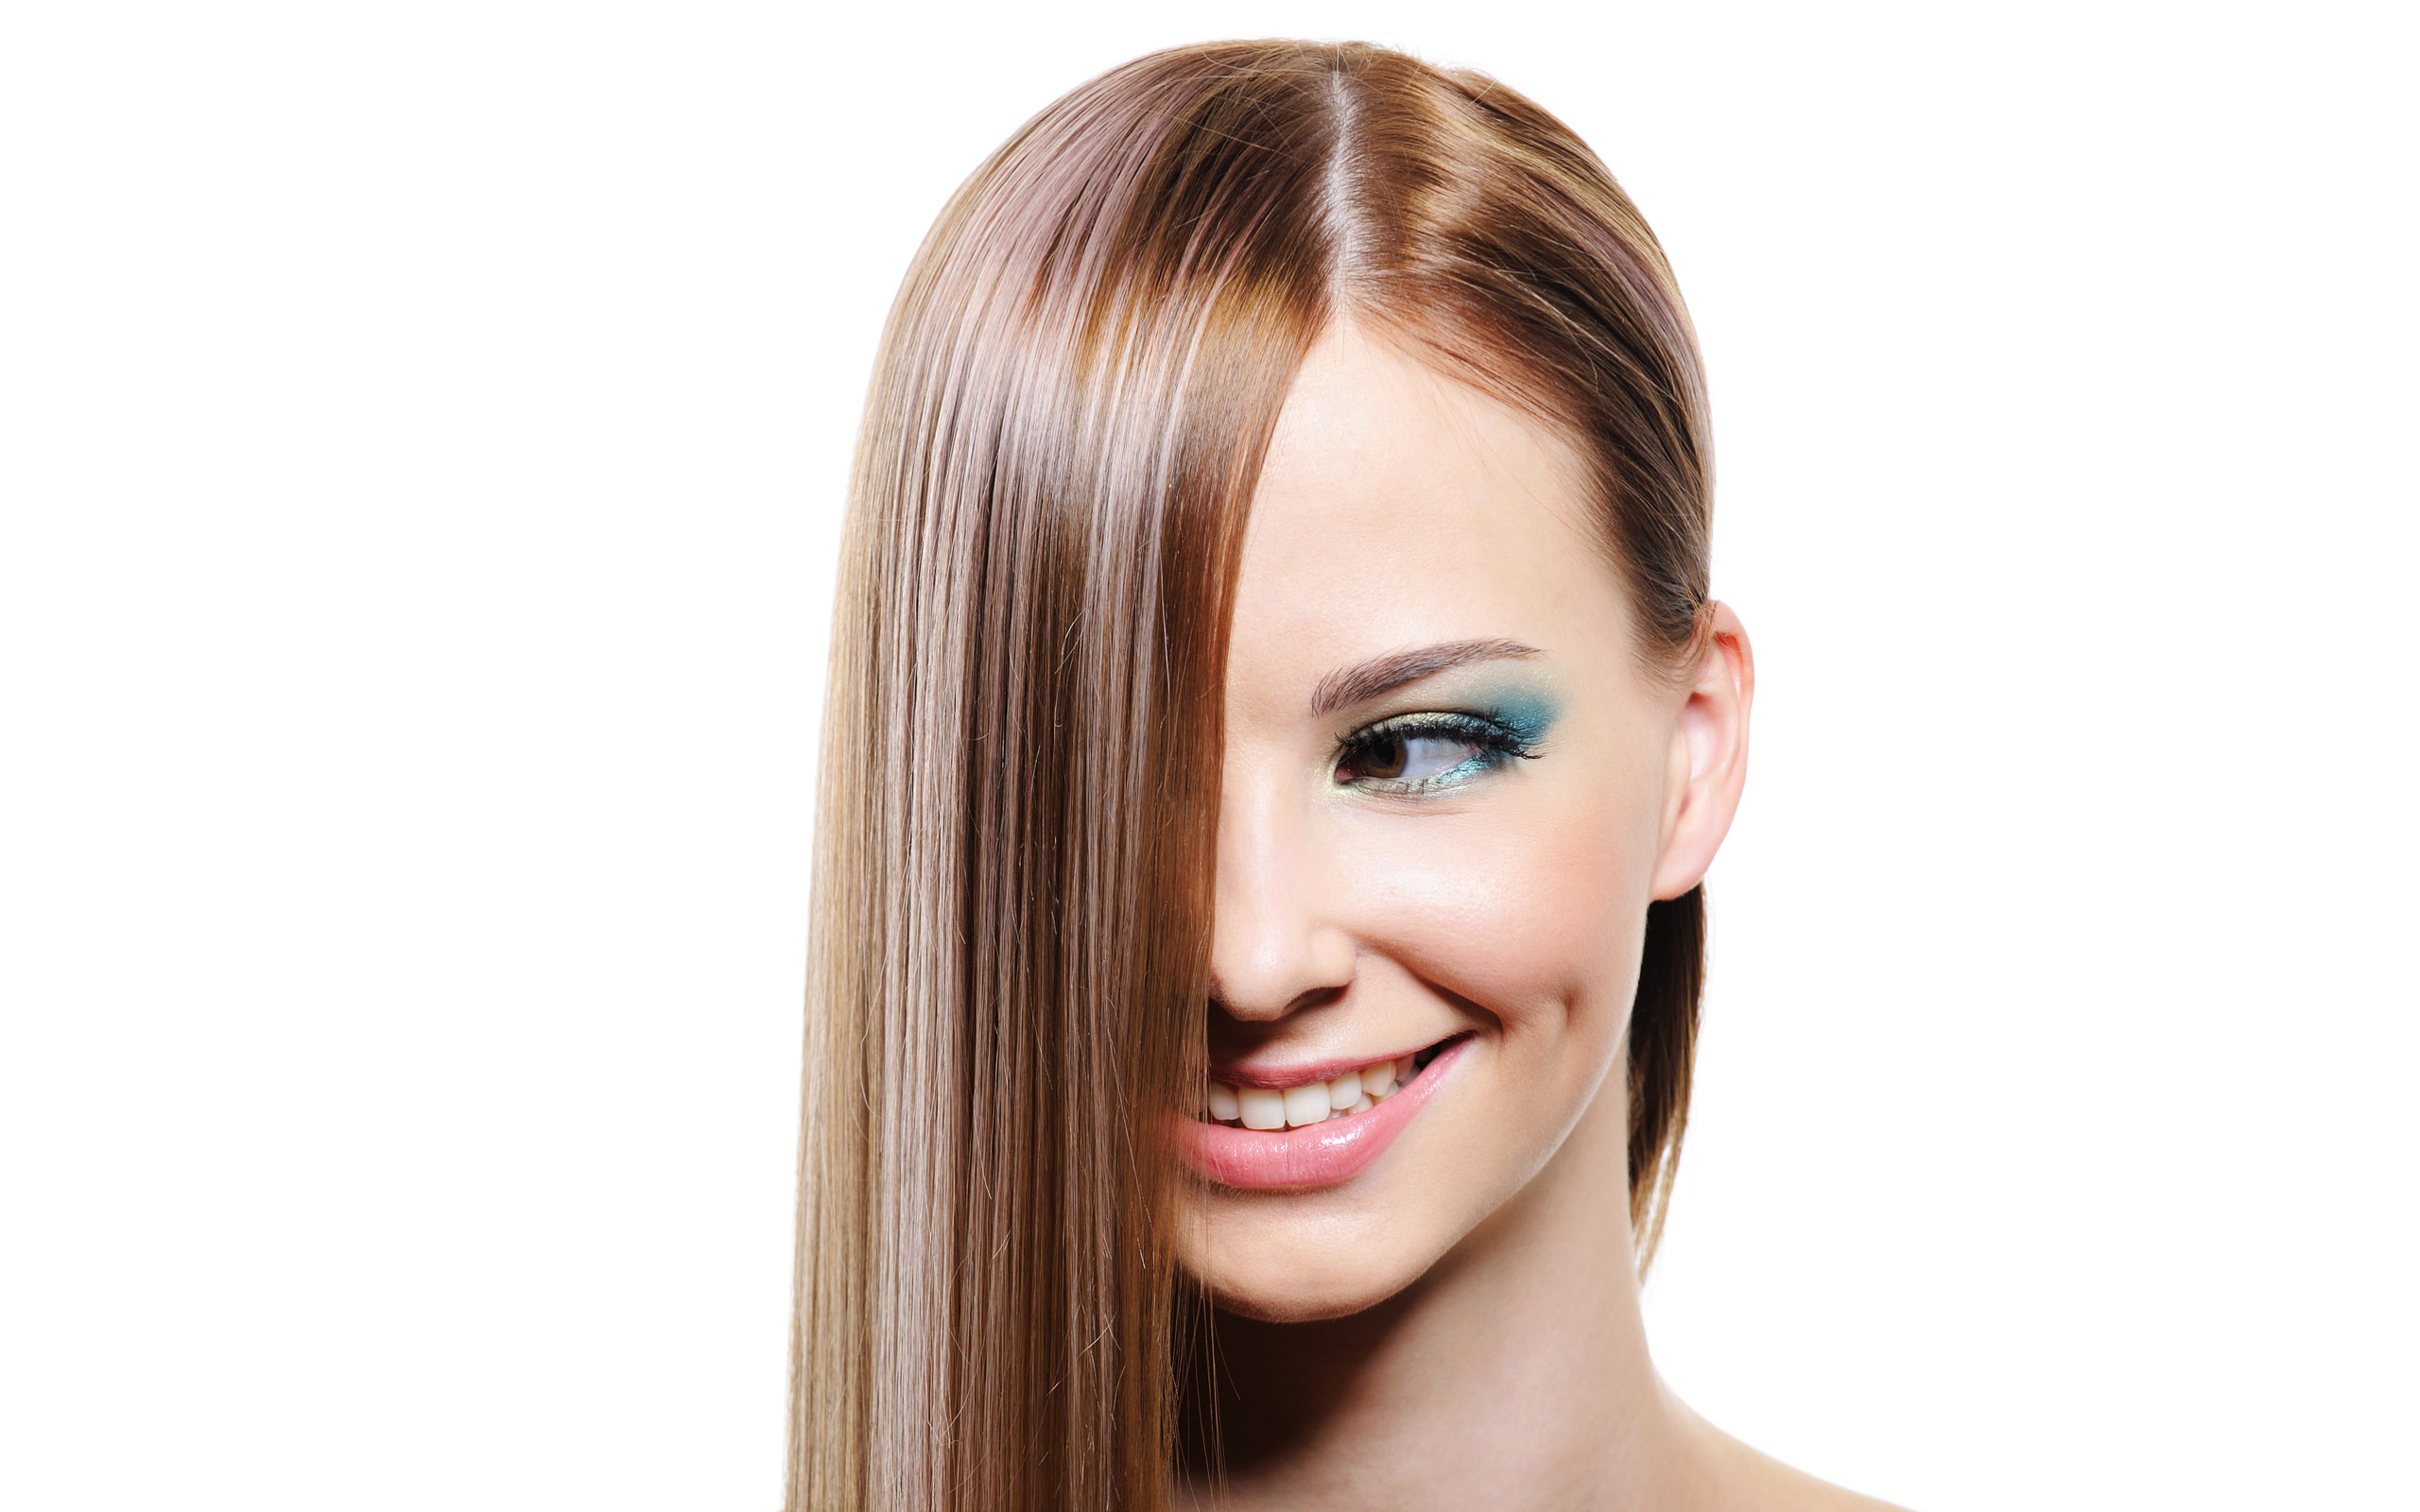 Women hair styles Wallpapers - HD Wallpapers 83910